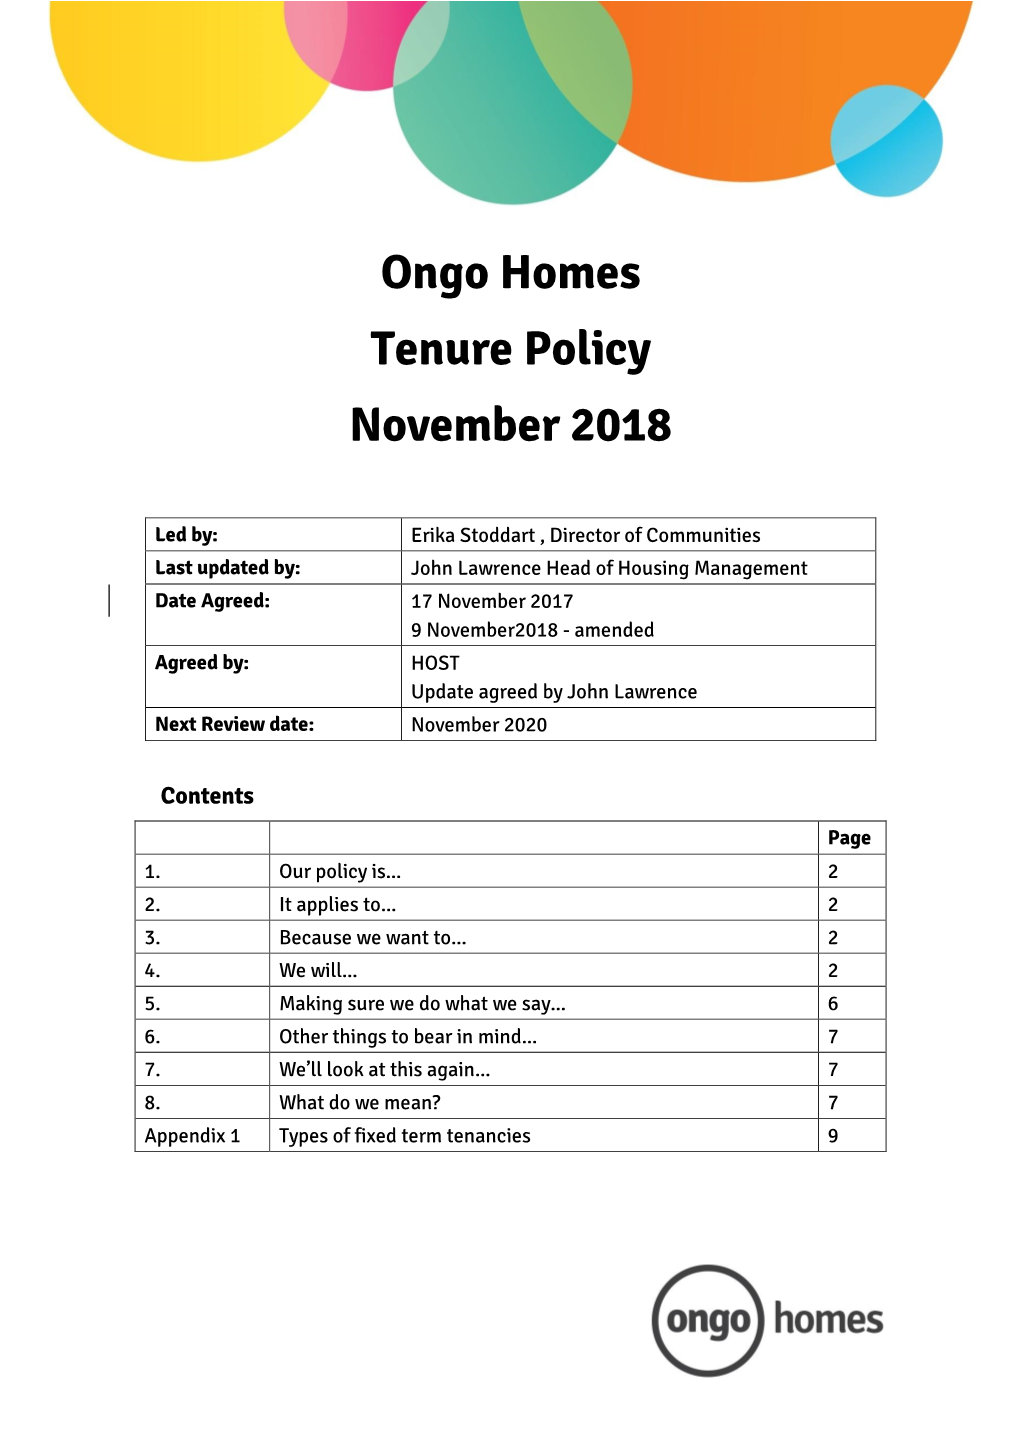 Ongo Homes Tenure Policy November 2018